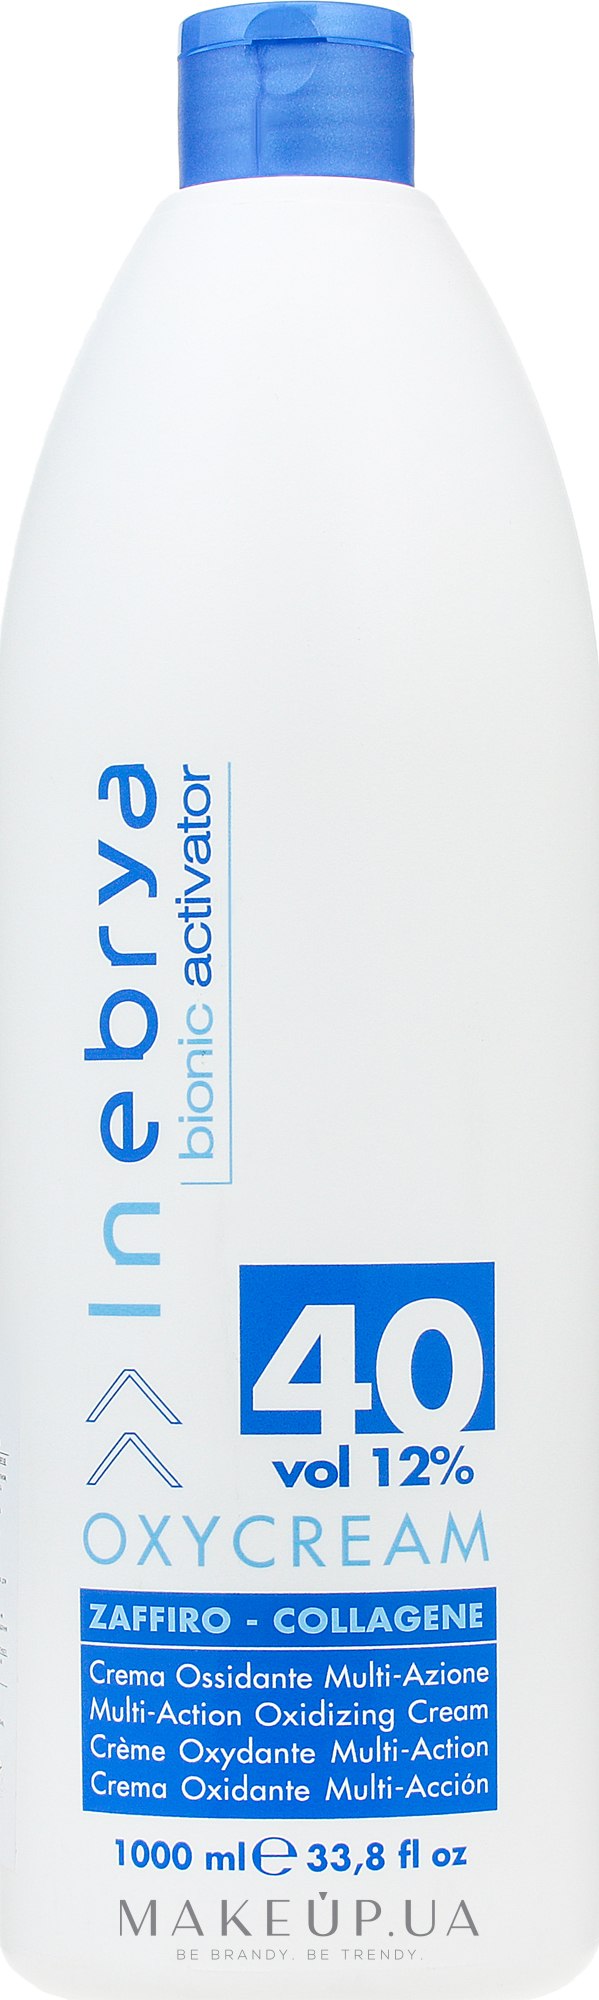 Оксі-крем "Сапфір-колаген", 40, 12% - Inebrya Bionic Activator Oxycream 40 Vol 12% — фото 1000ml